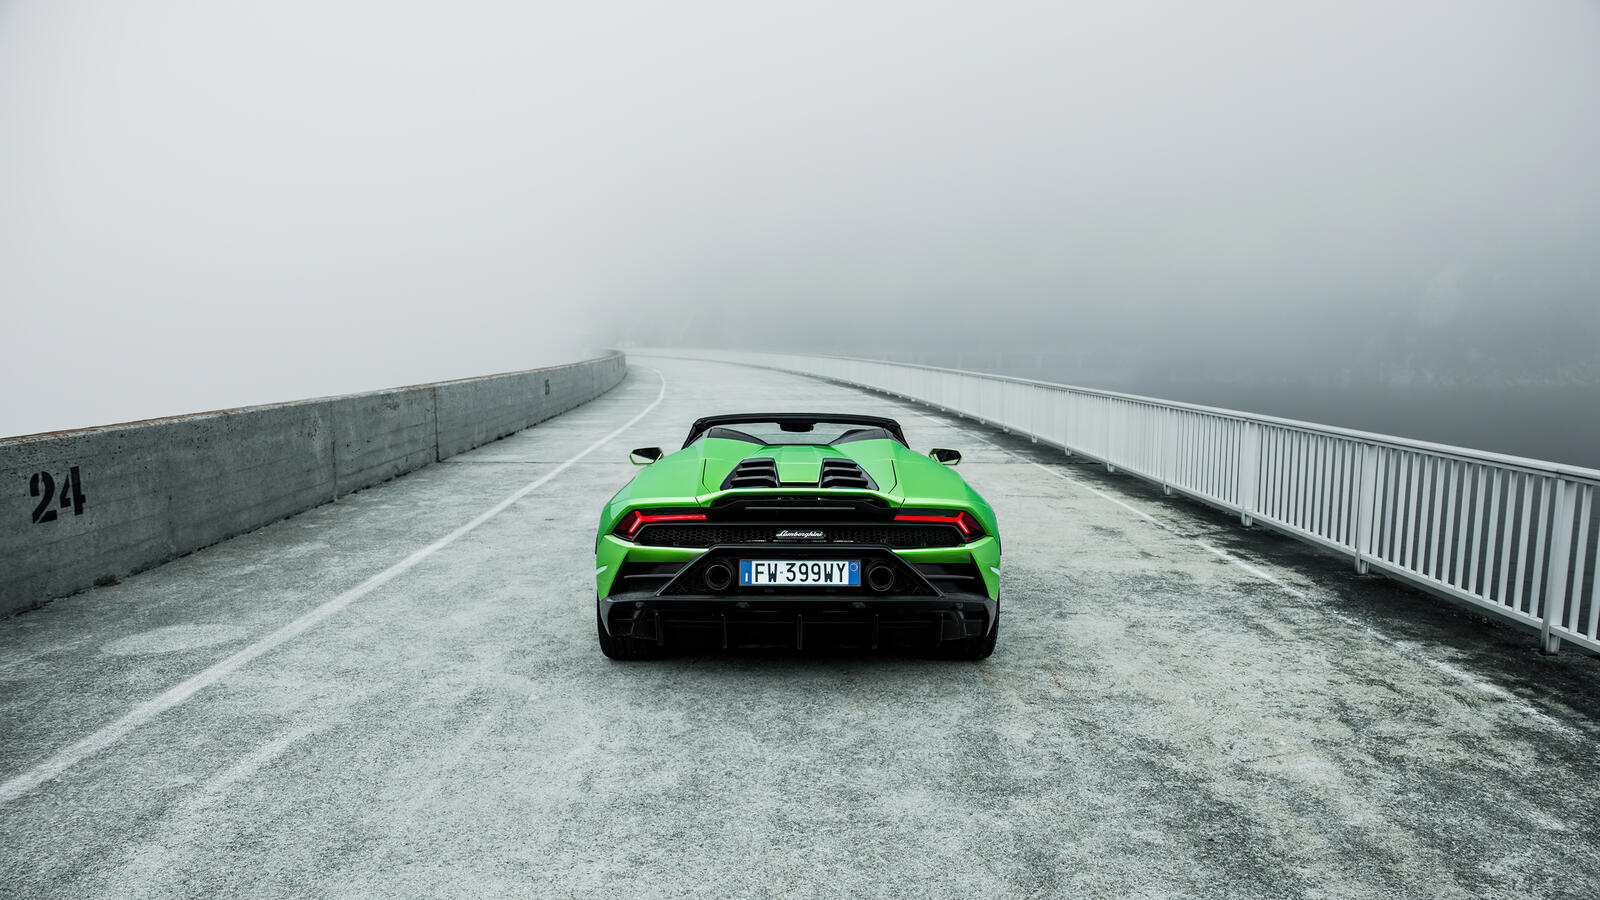 Wallpapers cars Lamborghini Huracan Evo Behance on the desktop